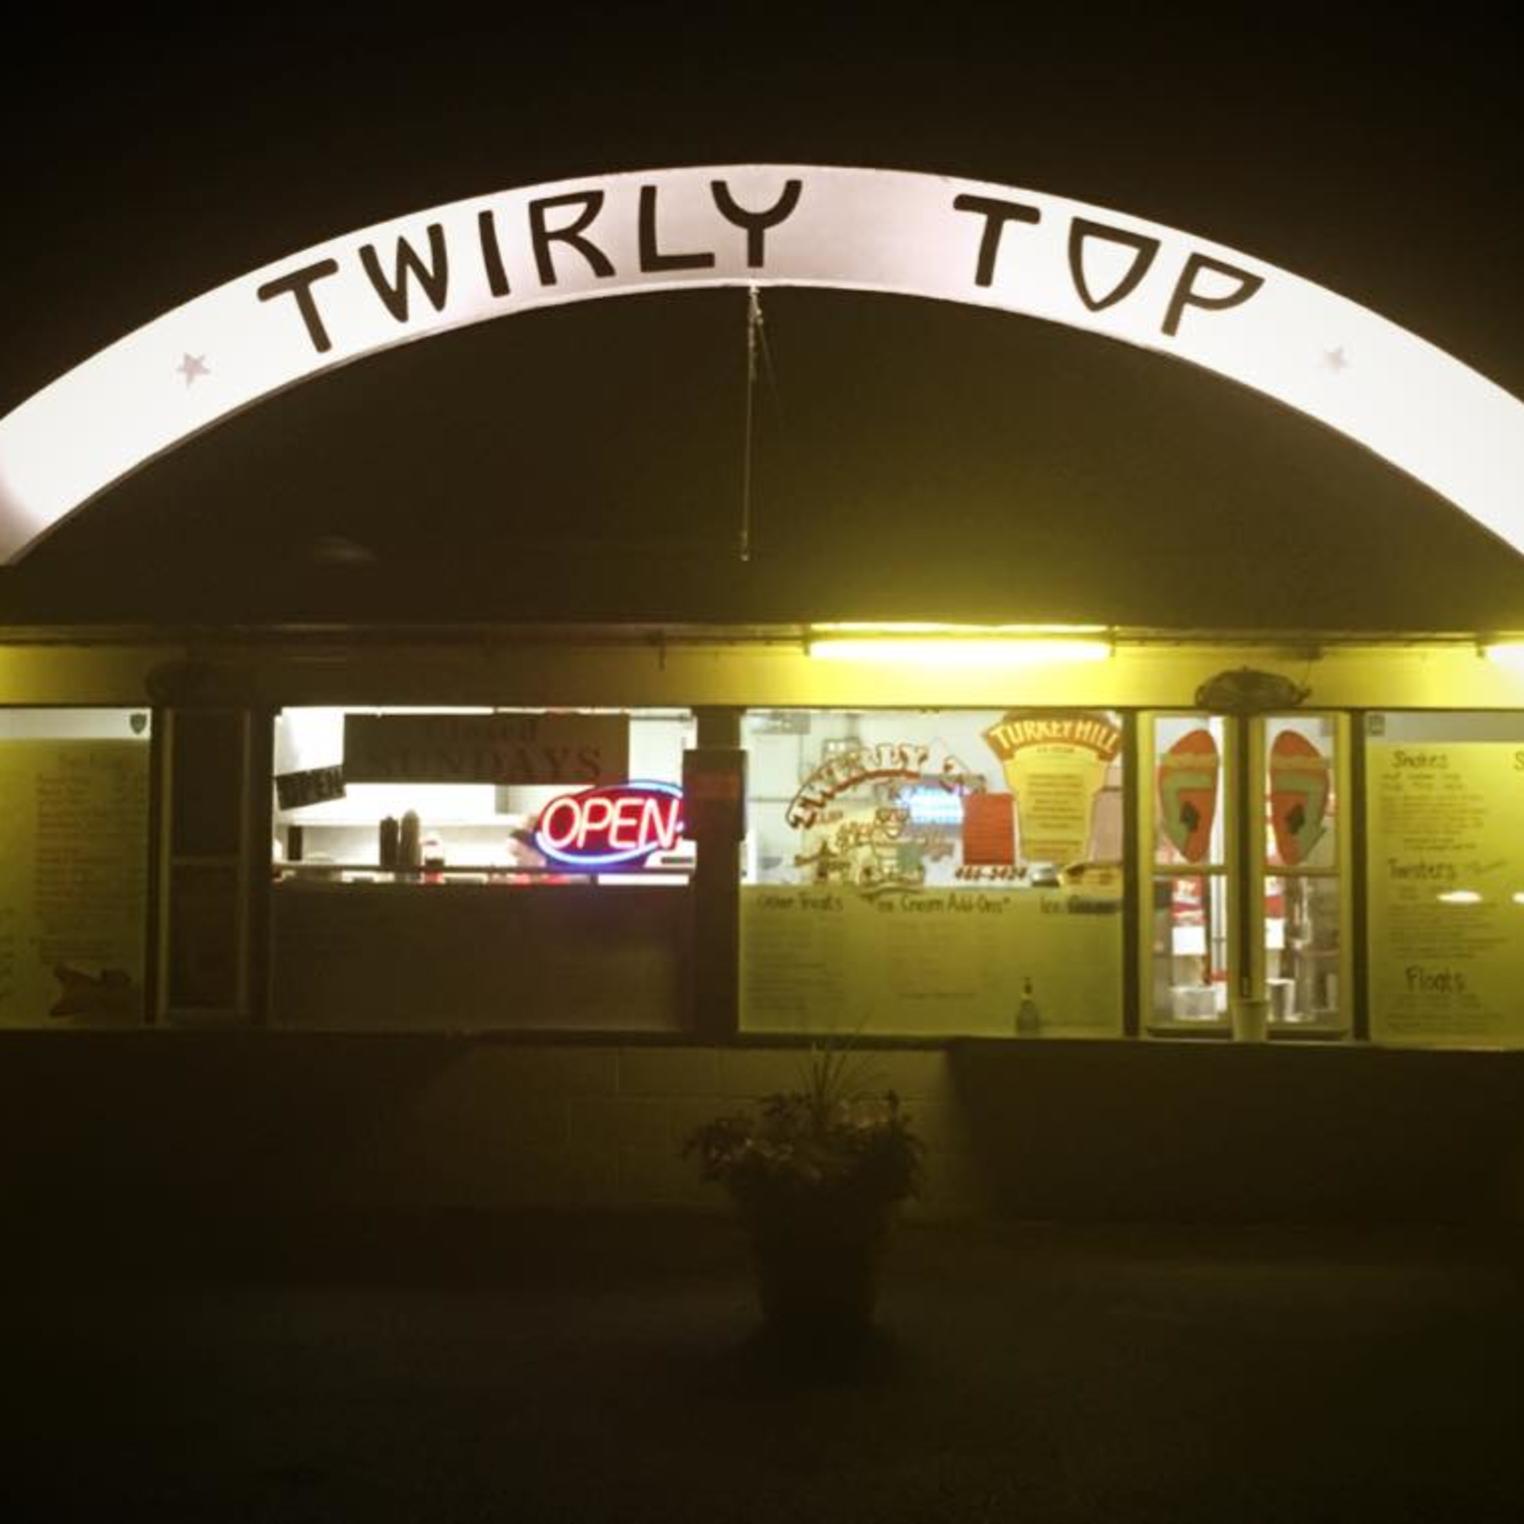 Twirly Top Arch at Night